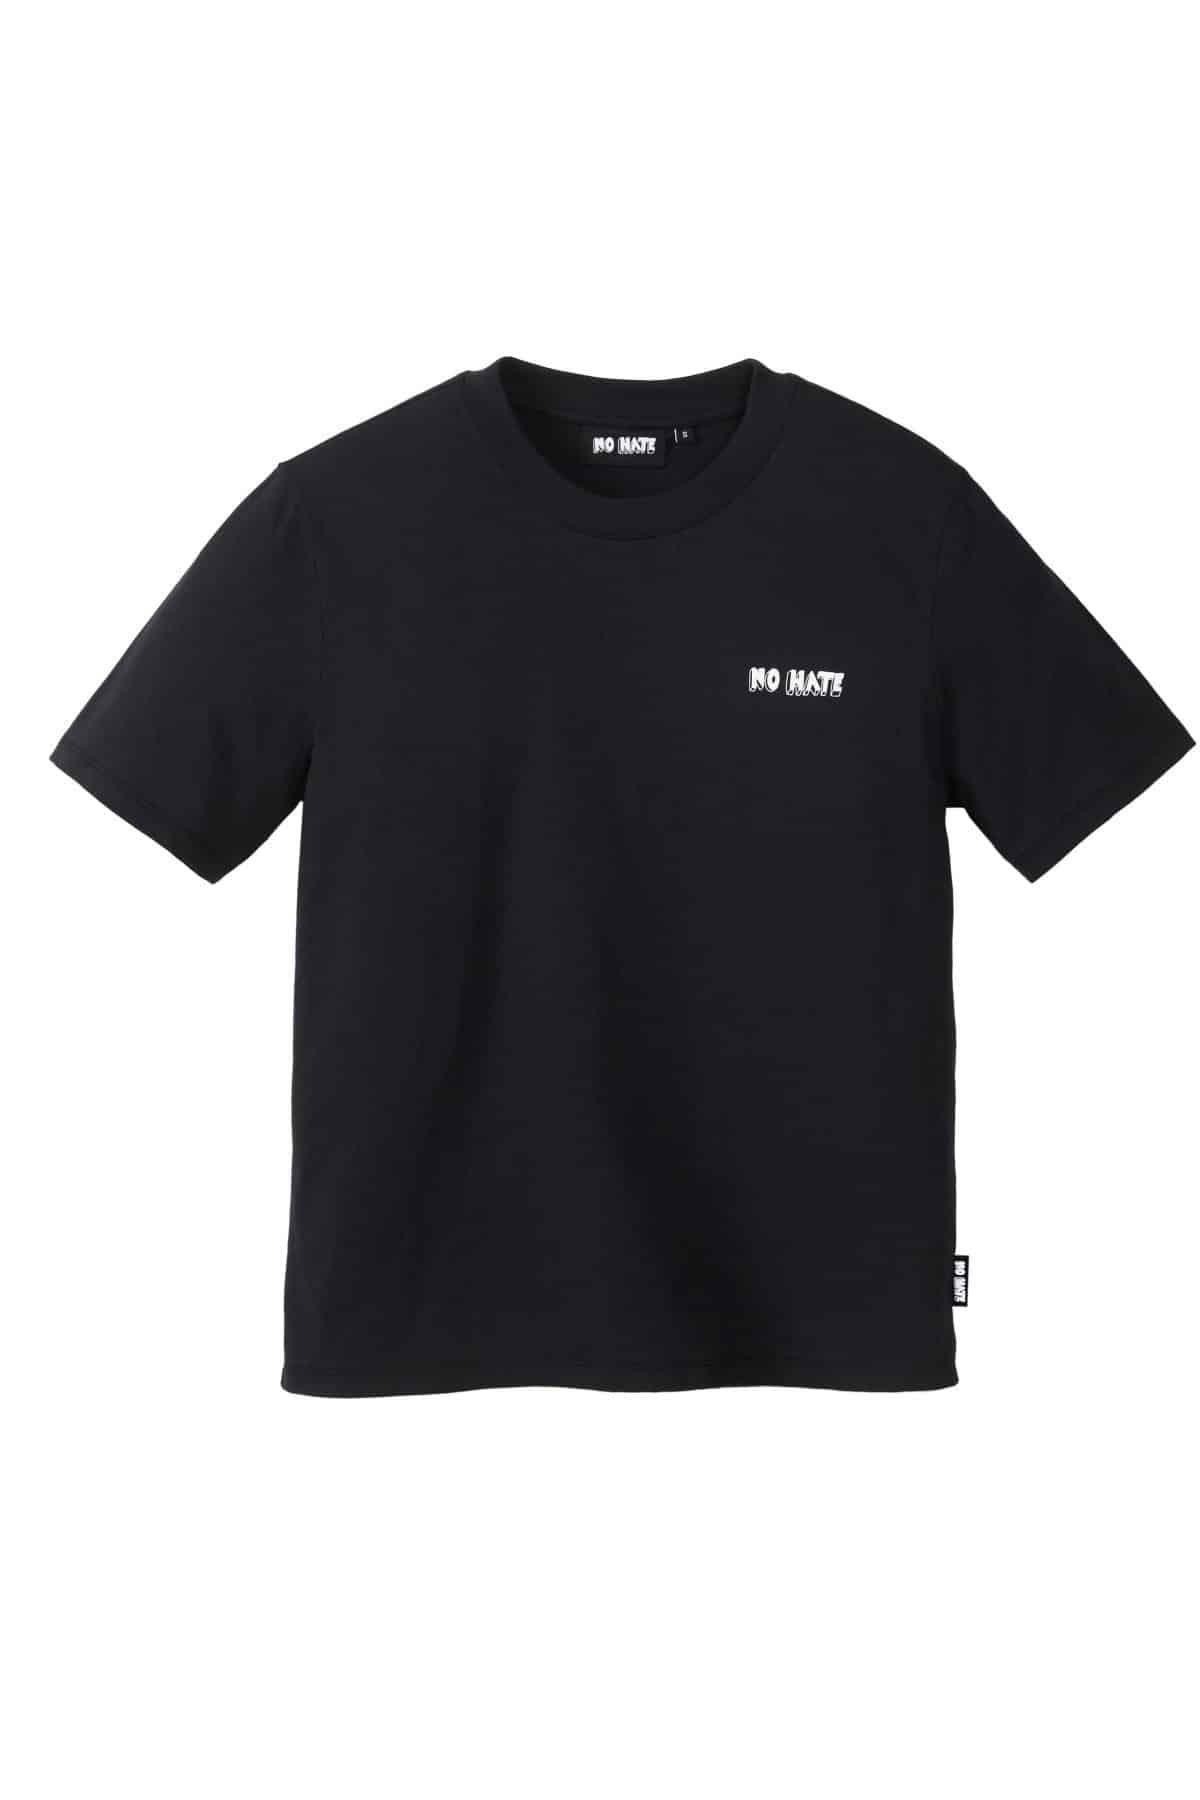 fbbb5d32-recolution-t-shirt-women-no-hate-schwarz-lov16193-1_1200x1800